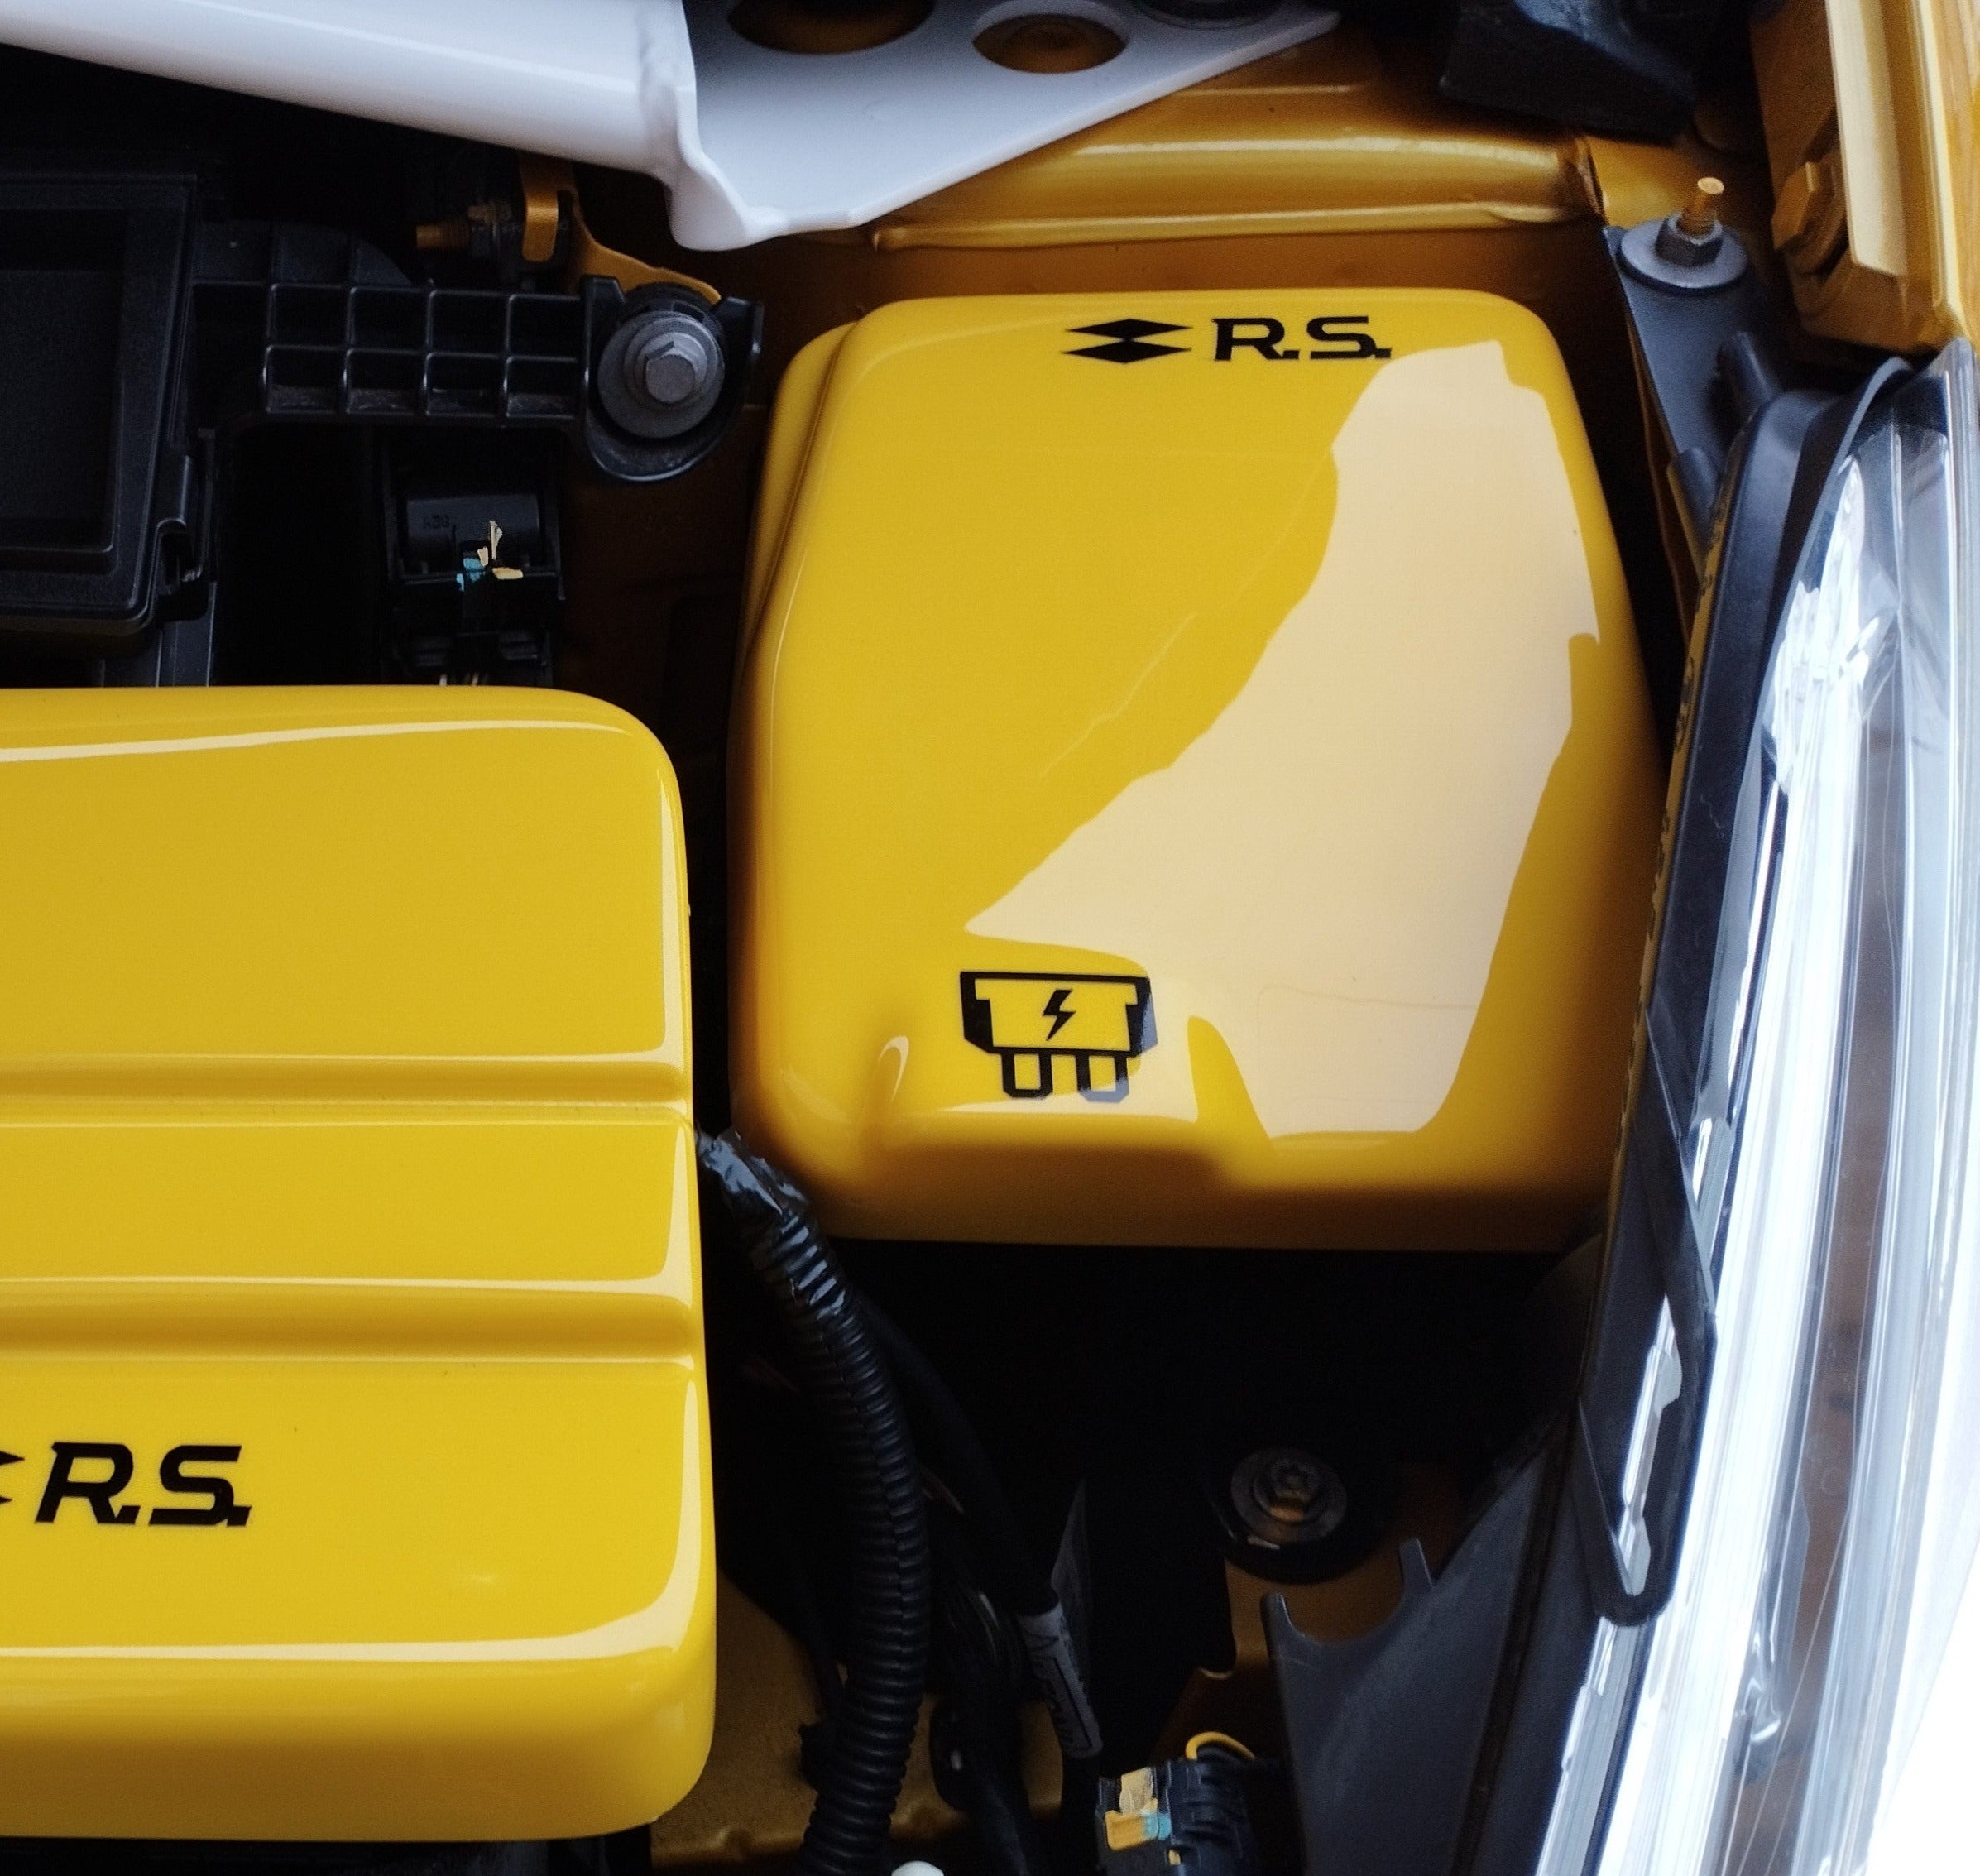 Proform Fuse Box Cover - Mk4 Renault Clio RS (Plastic Finishes)